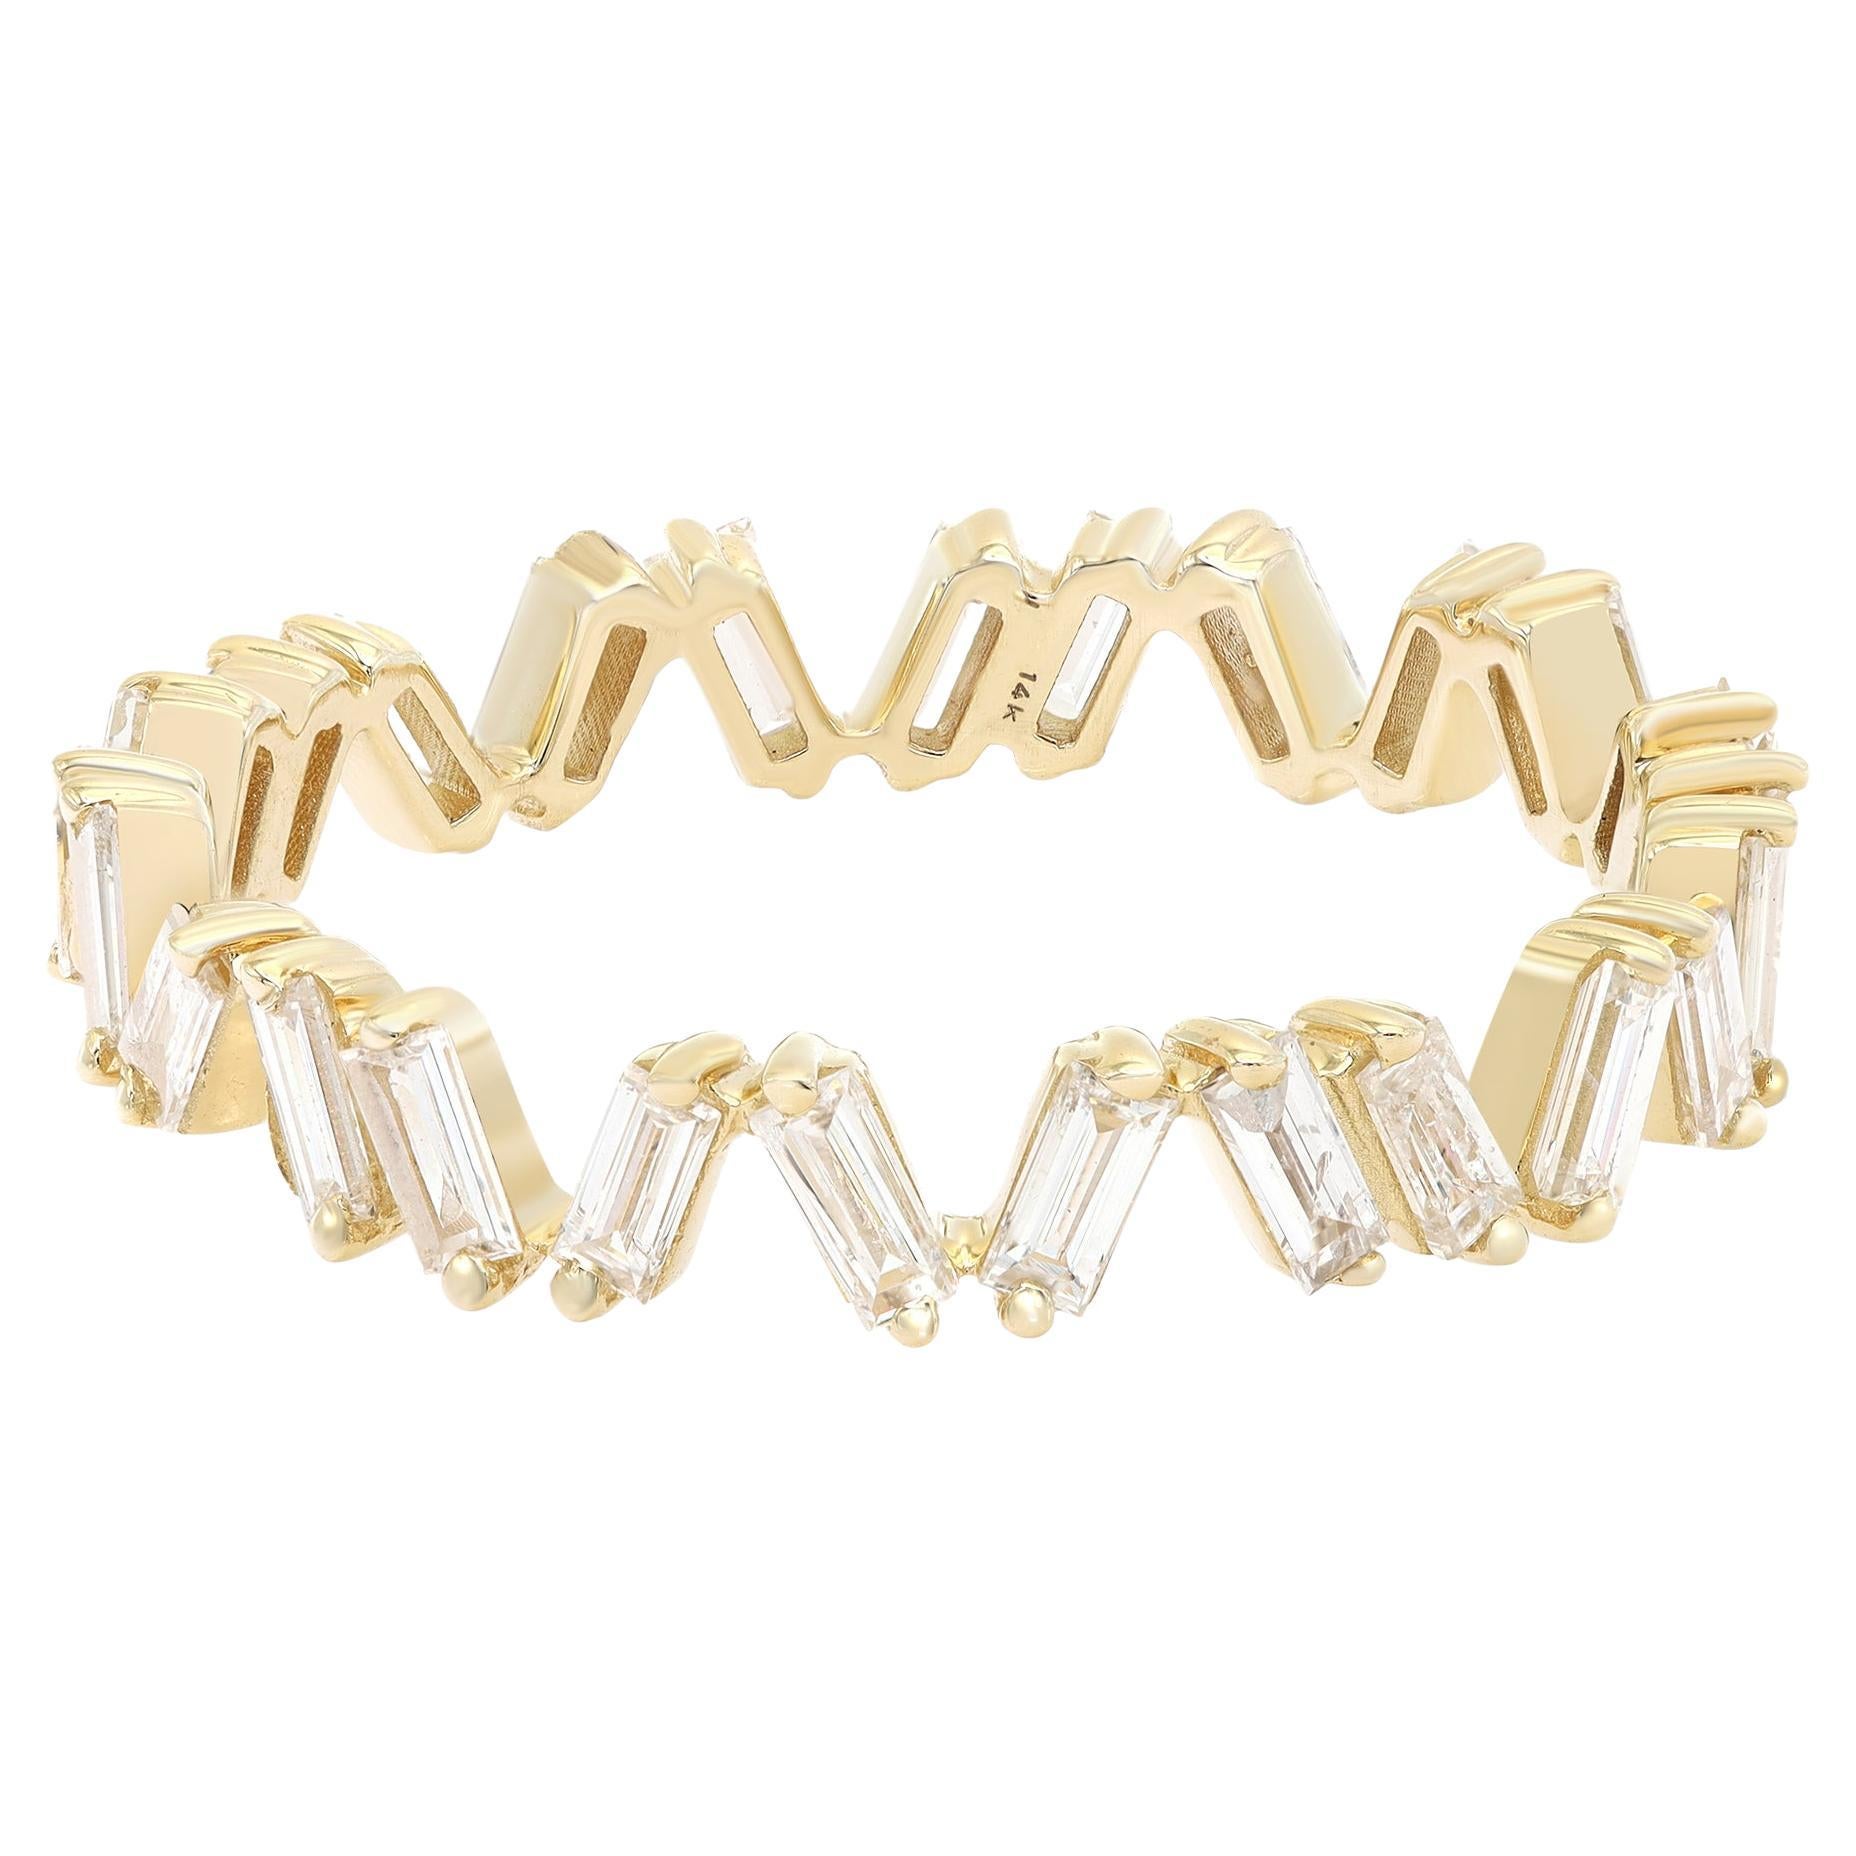 Rachel Koen Baguette Cut Diamond Ring Band 14k Yellow Gold 0.69Cttw Size 6.25 For Sale